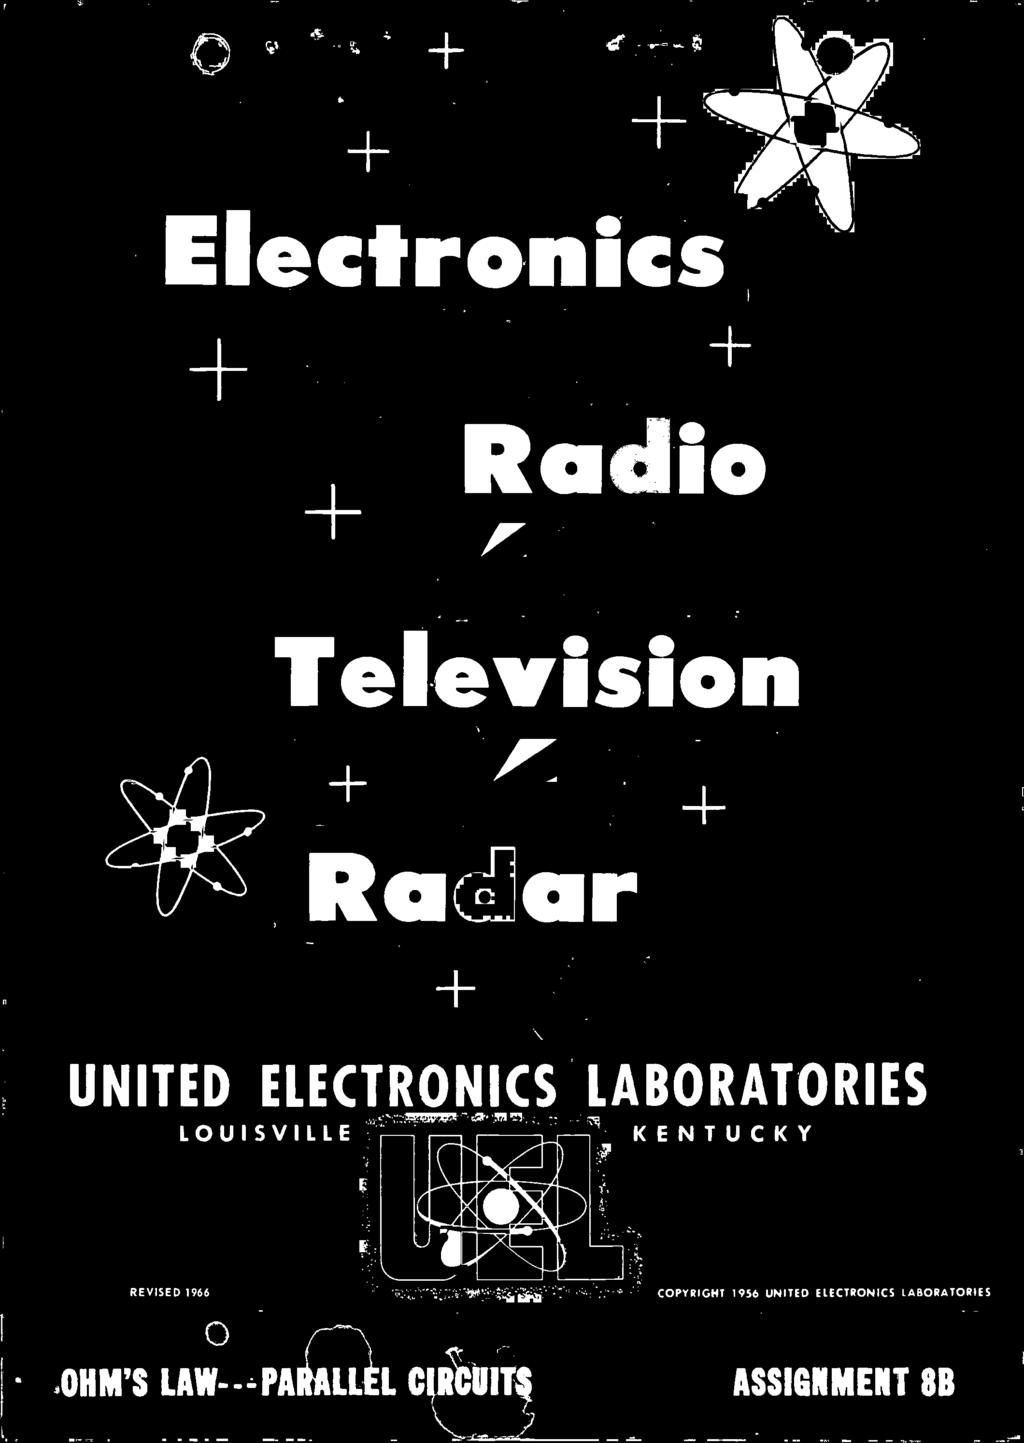 1956 UNITED ELECTRONICS